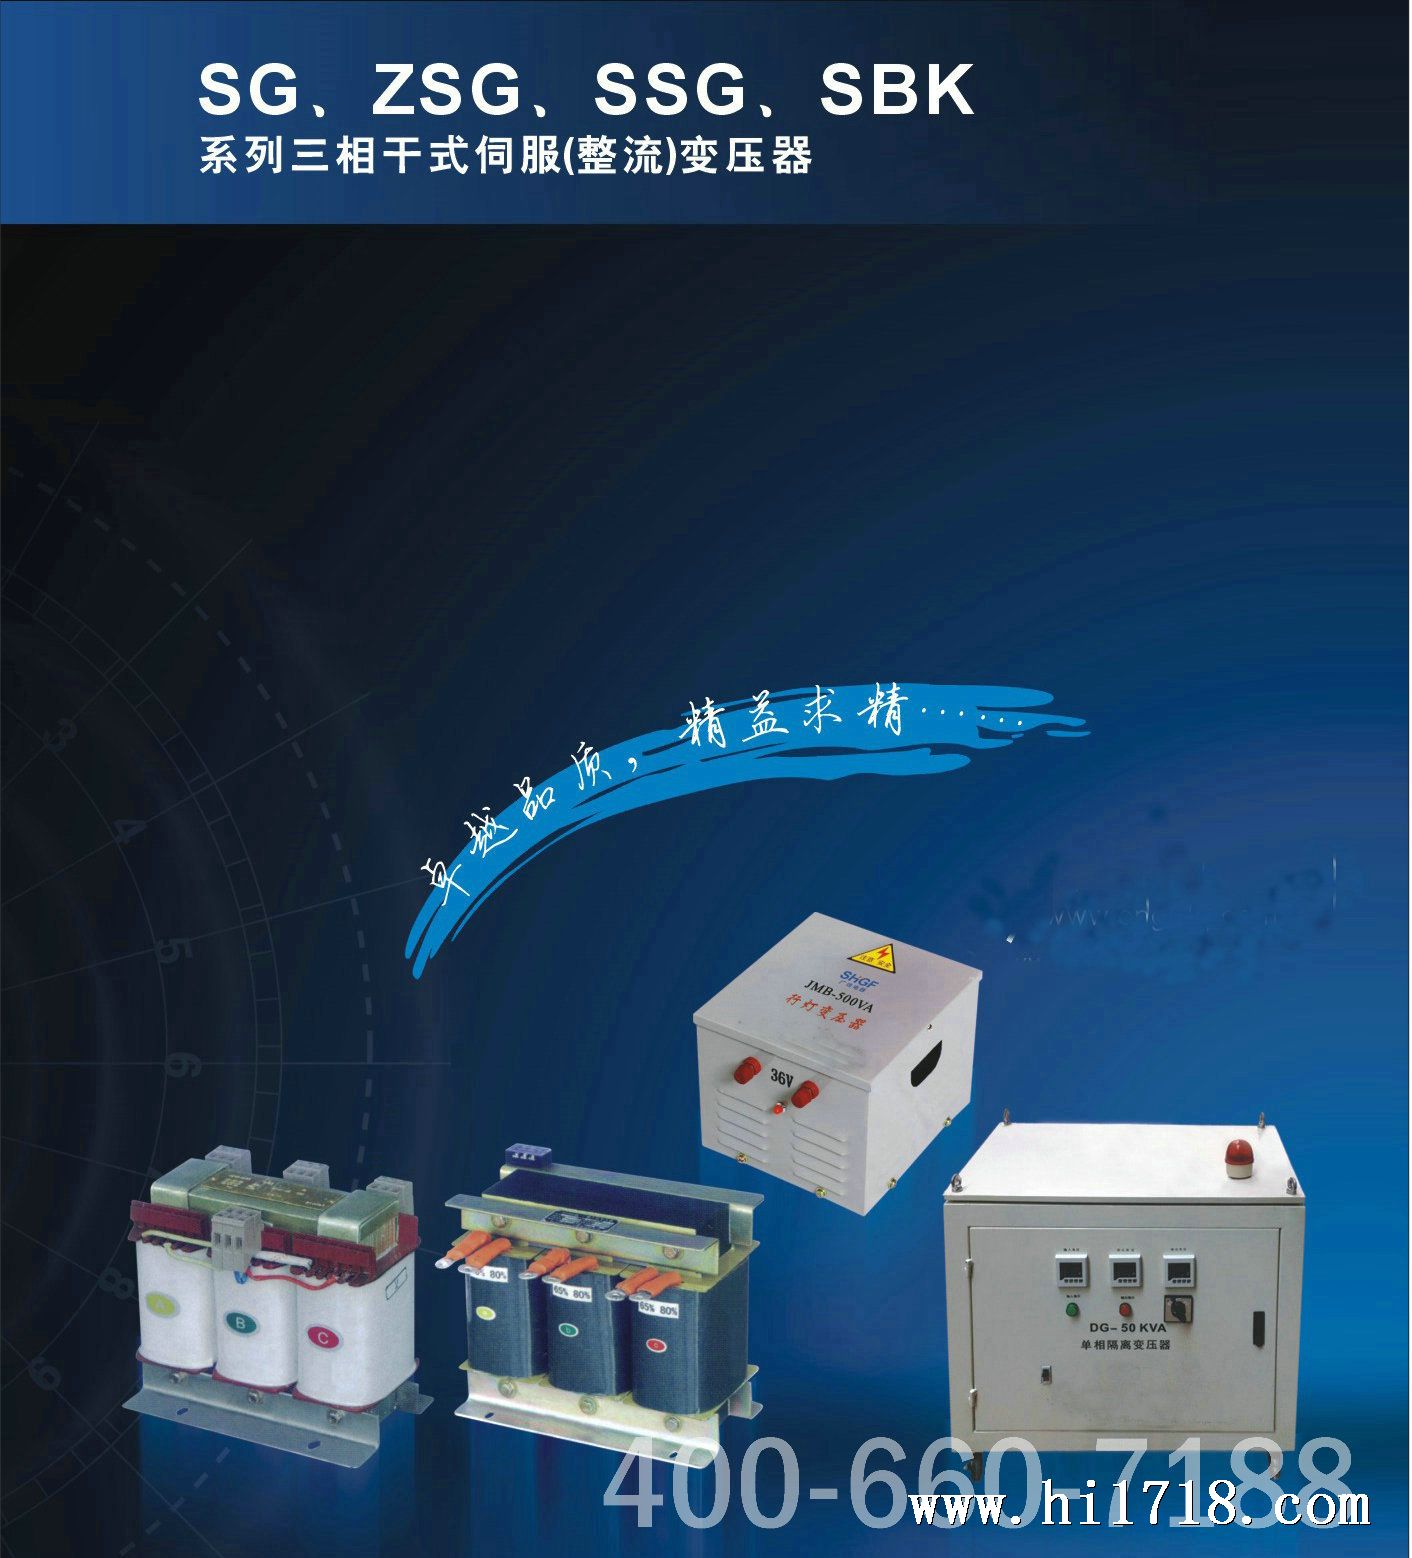 SG、ZSG、SSG、SBK系列三相式整流变压器 - 副本